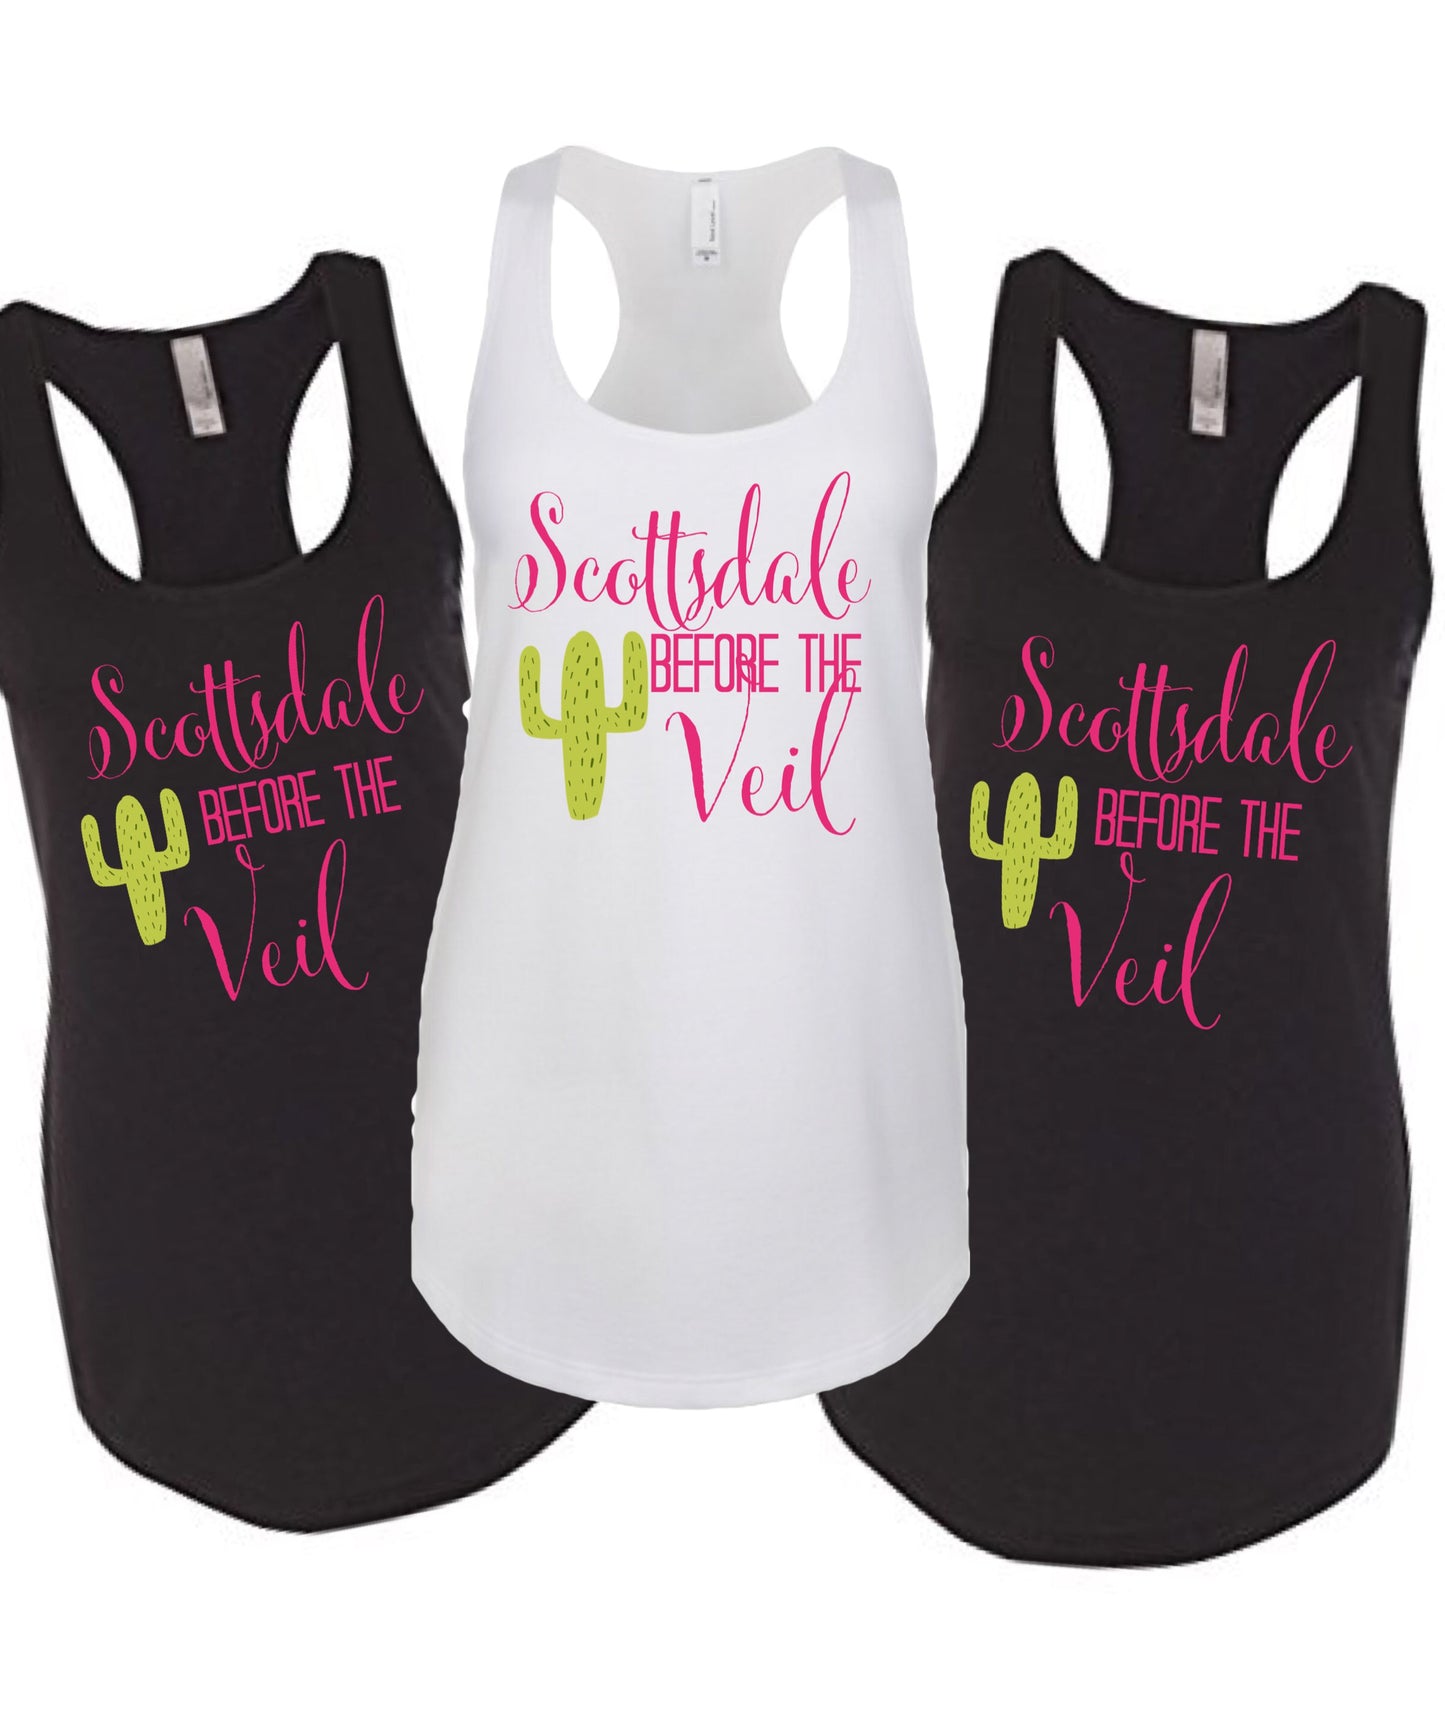 Scottsdale bachelorette tanks| Scottsdale party shirts| Bachelorette tanks| girls trip shirts| bachelorette shirts| Road trip| bridesmaid